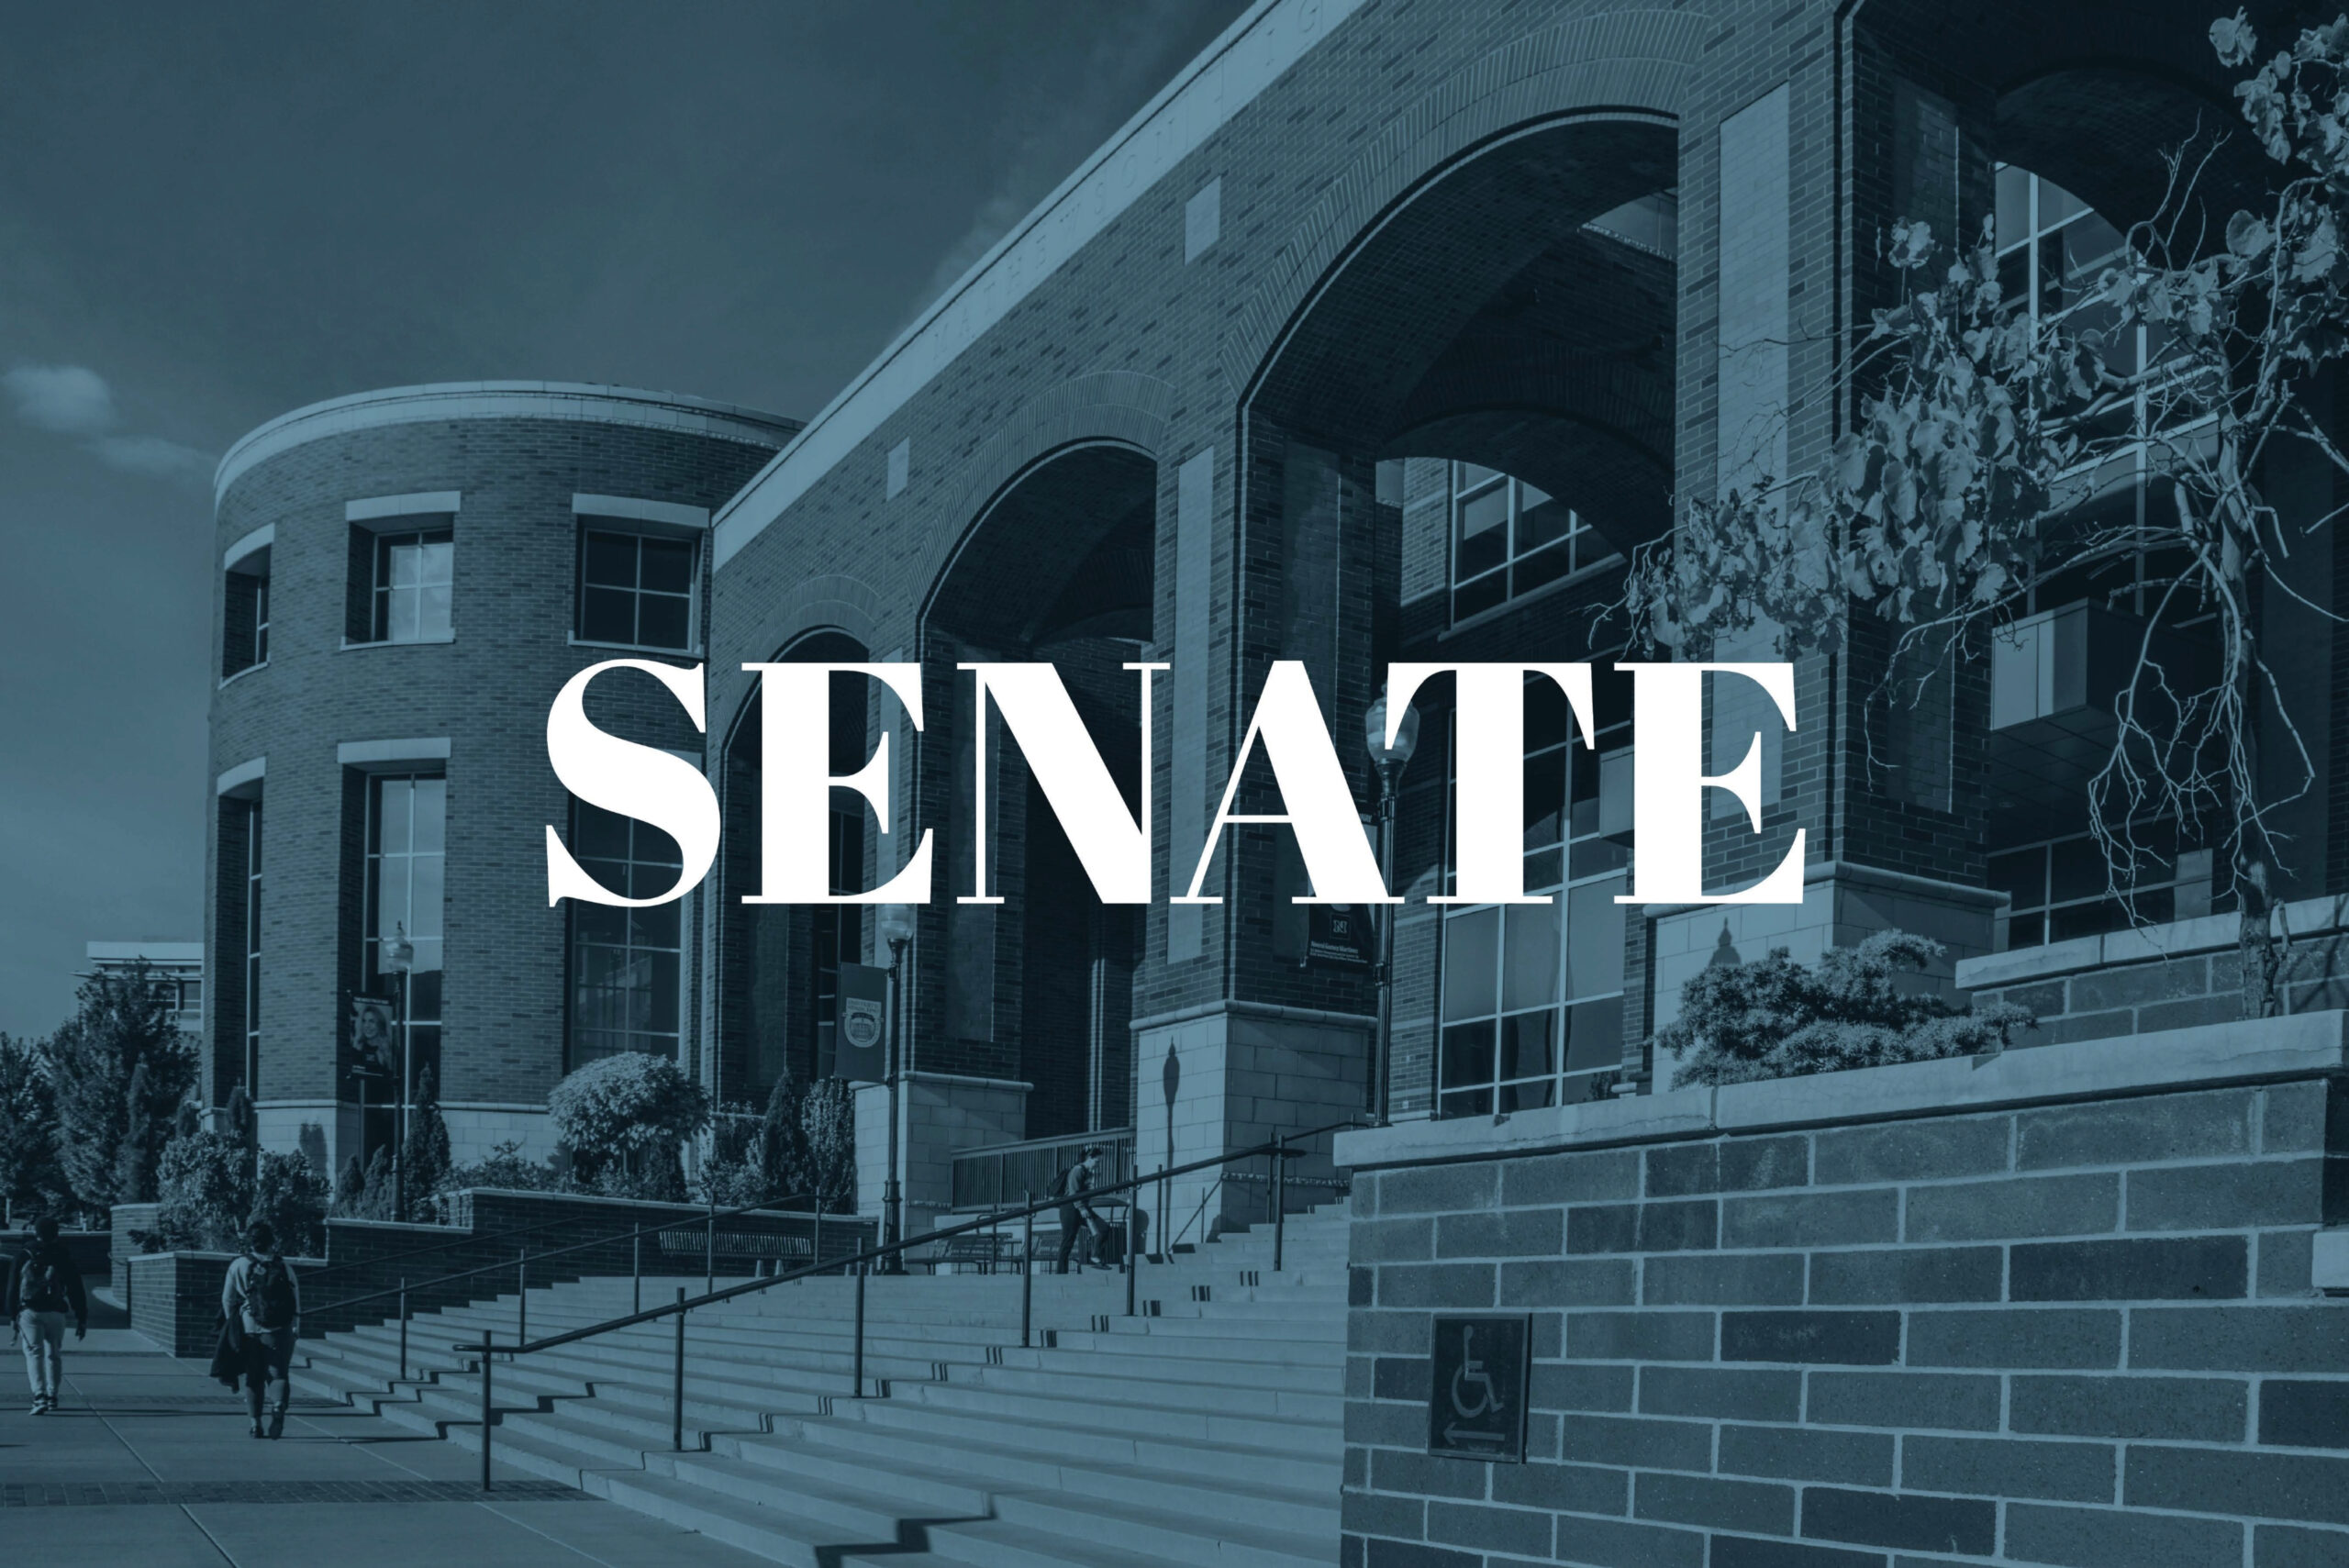 SENATE 10/11: Public comment on Fan case, new senator nominations, resolution regarding NevadaCares